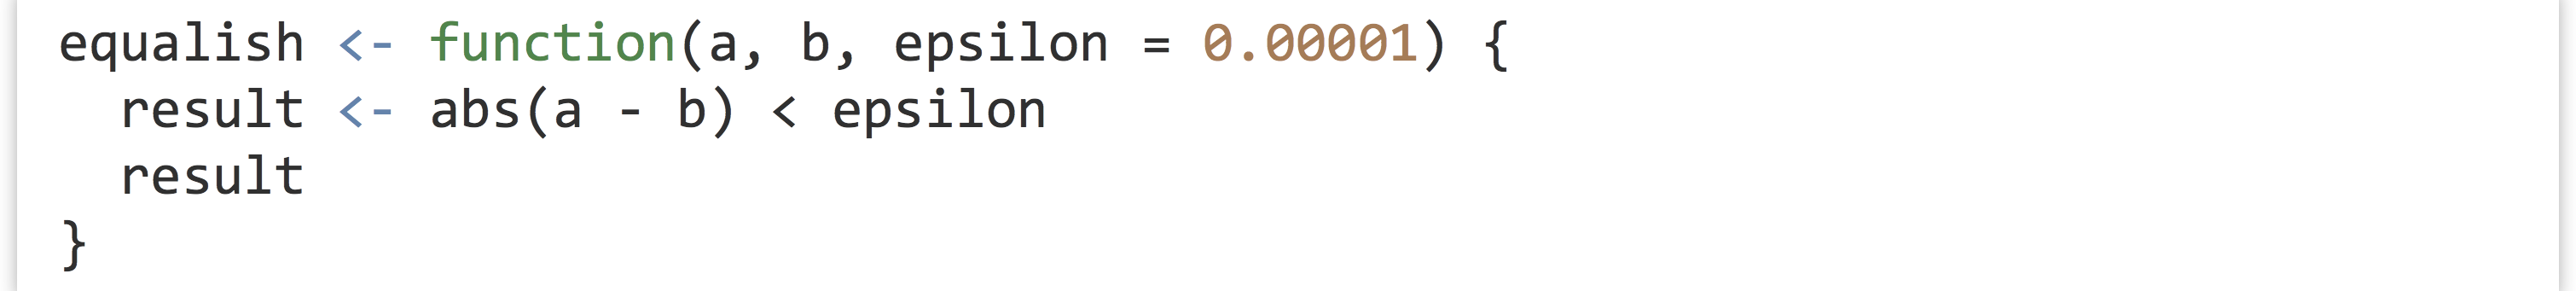 III.4_27_r_9000_equalish_function_no_return